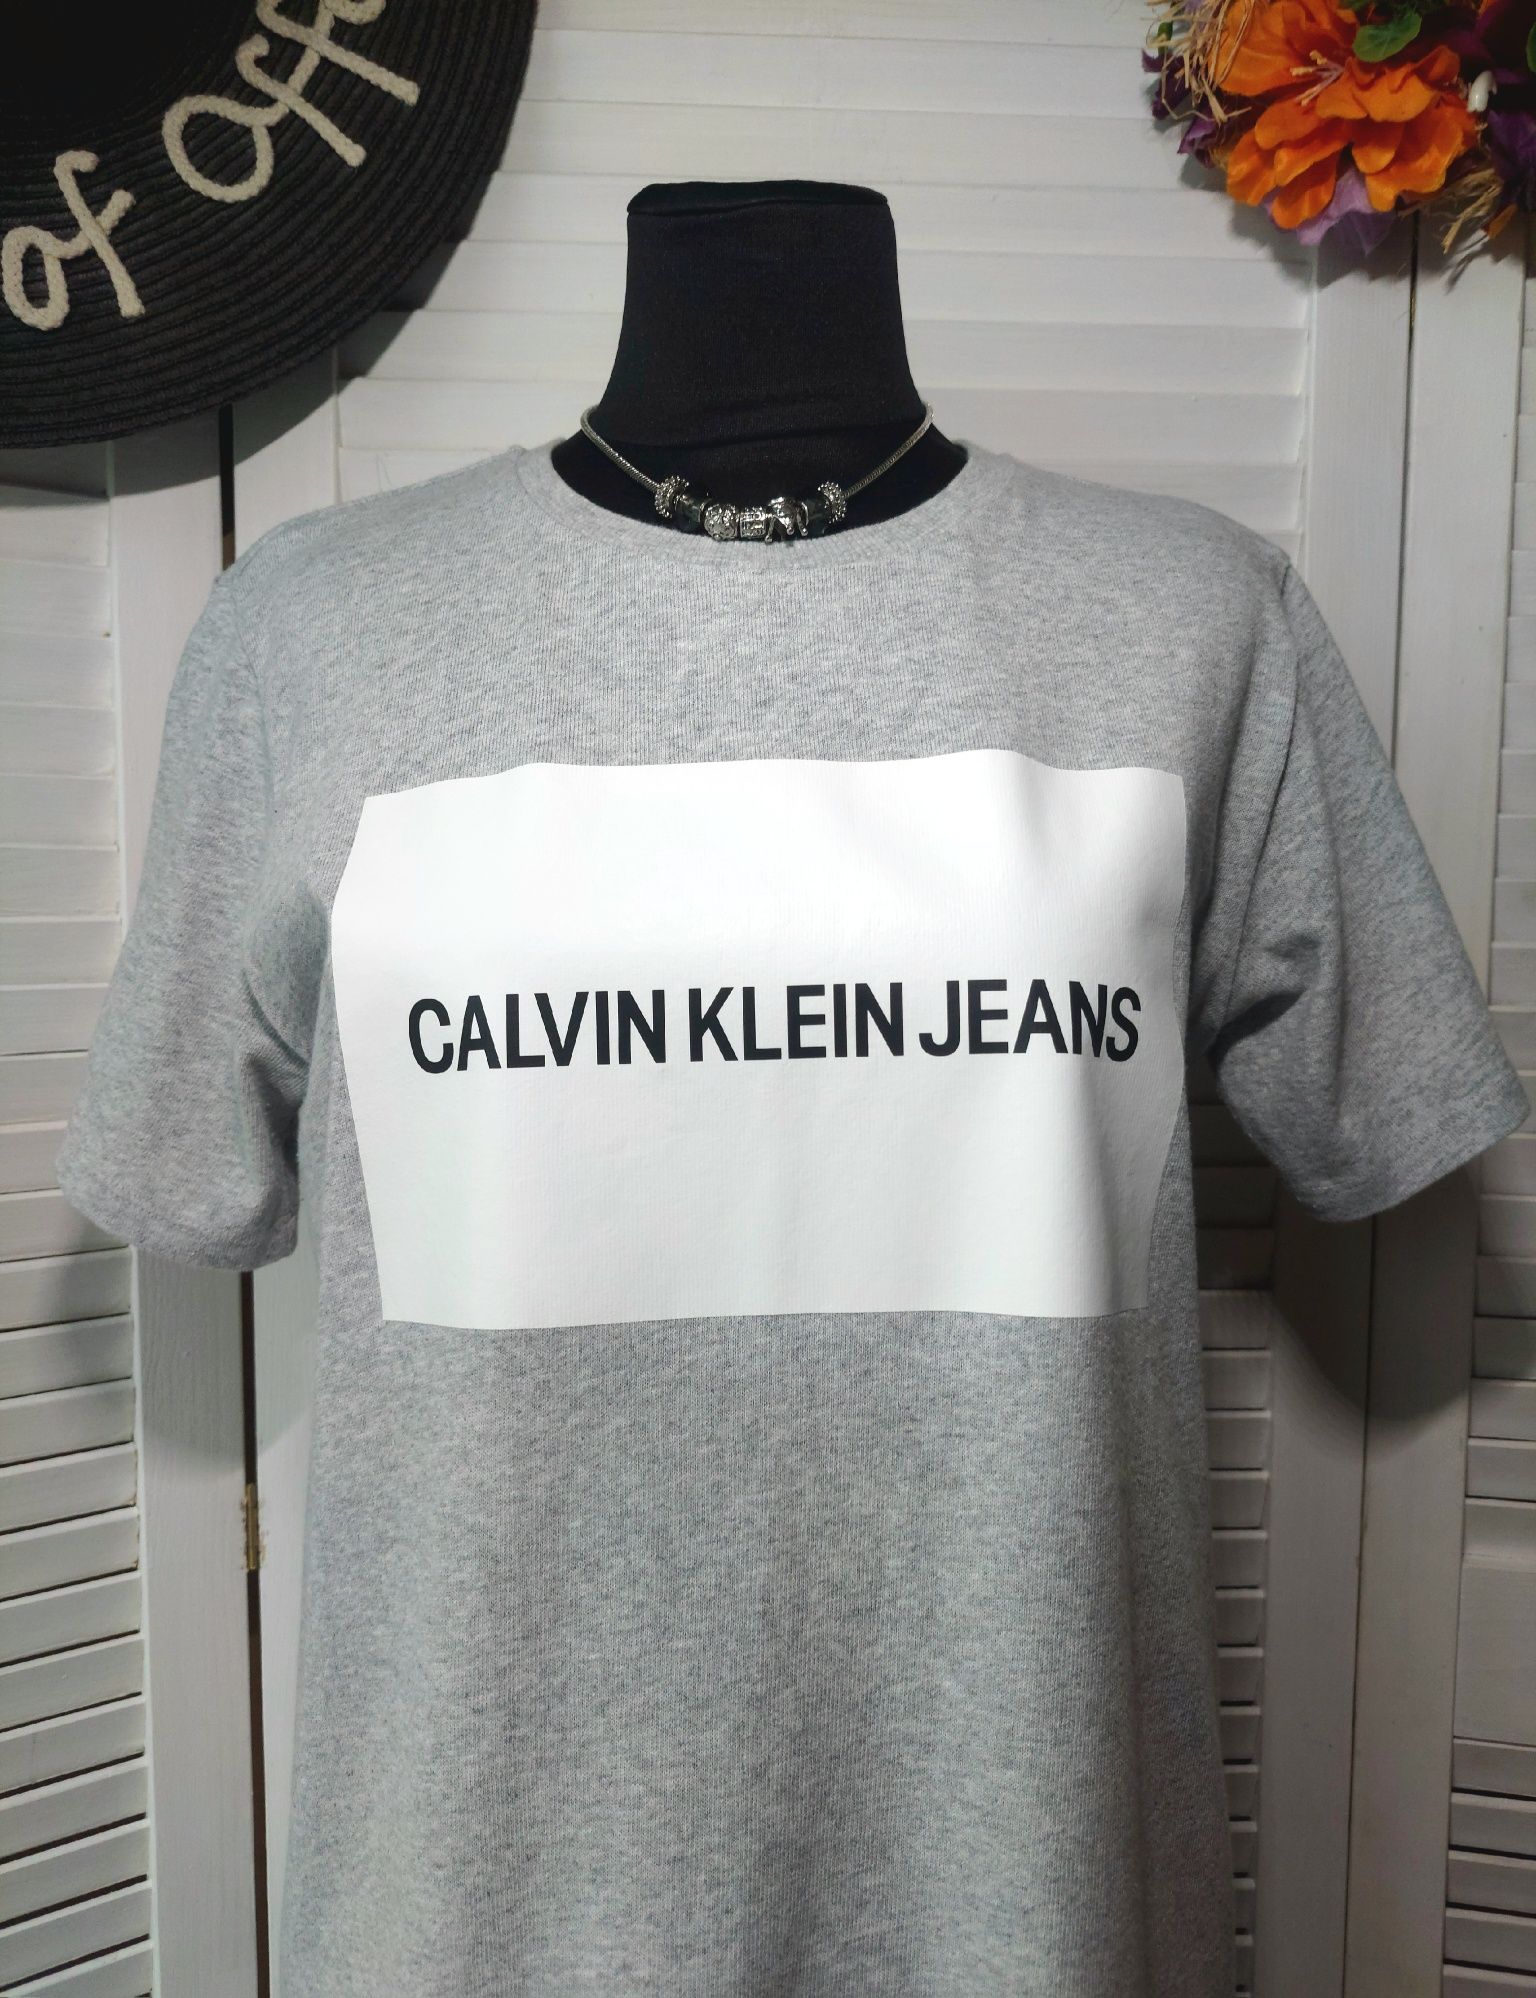 Платье футболка серое с логотипом s-m от CALVIN KLEIN JEANS